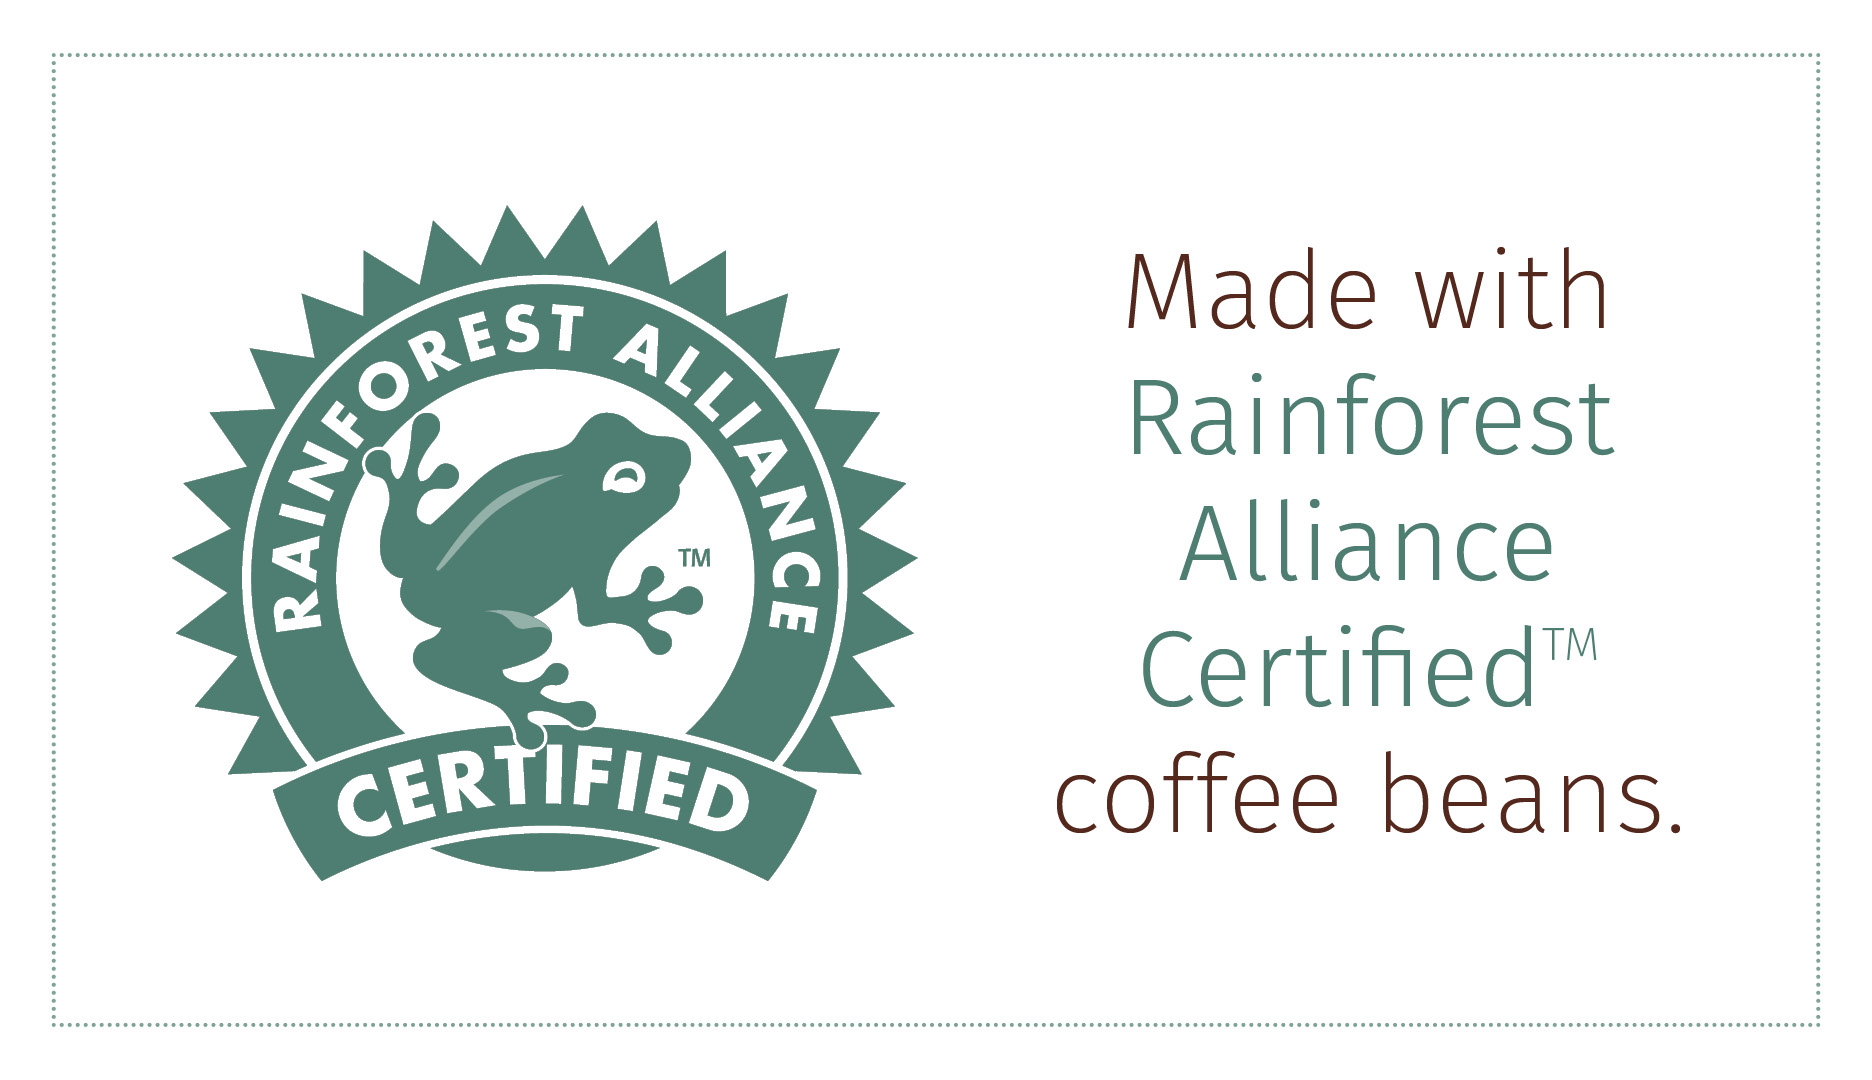 Rainforest Alliance Logo - Made with Rainforest Alliance Certified Coffee Beans